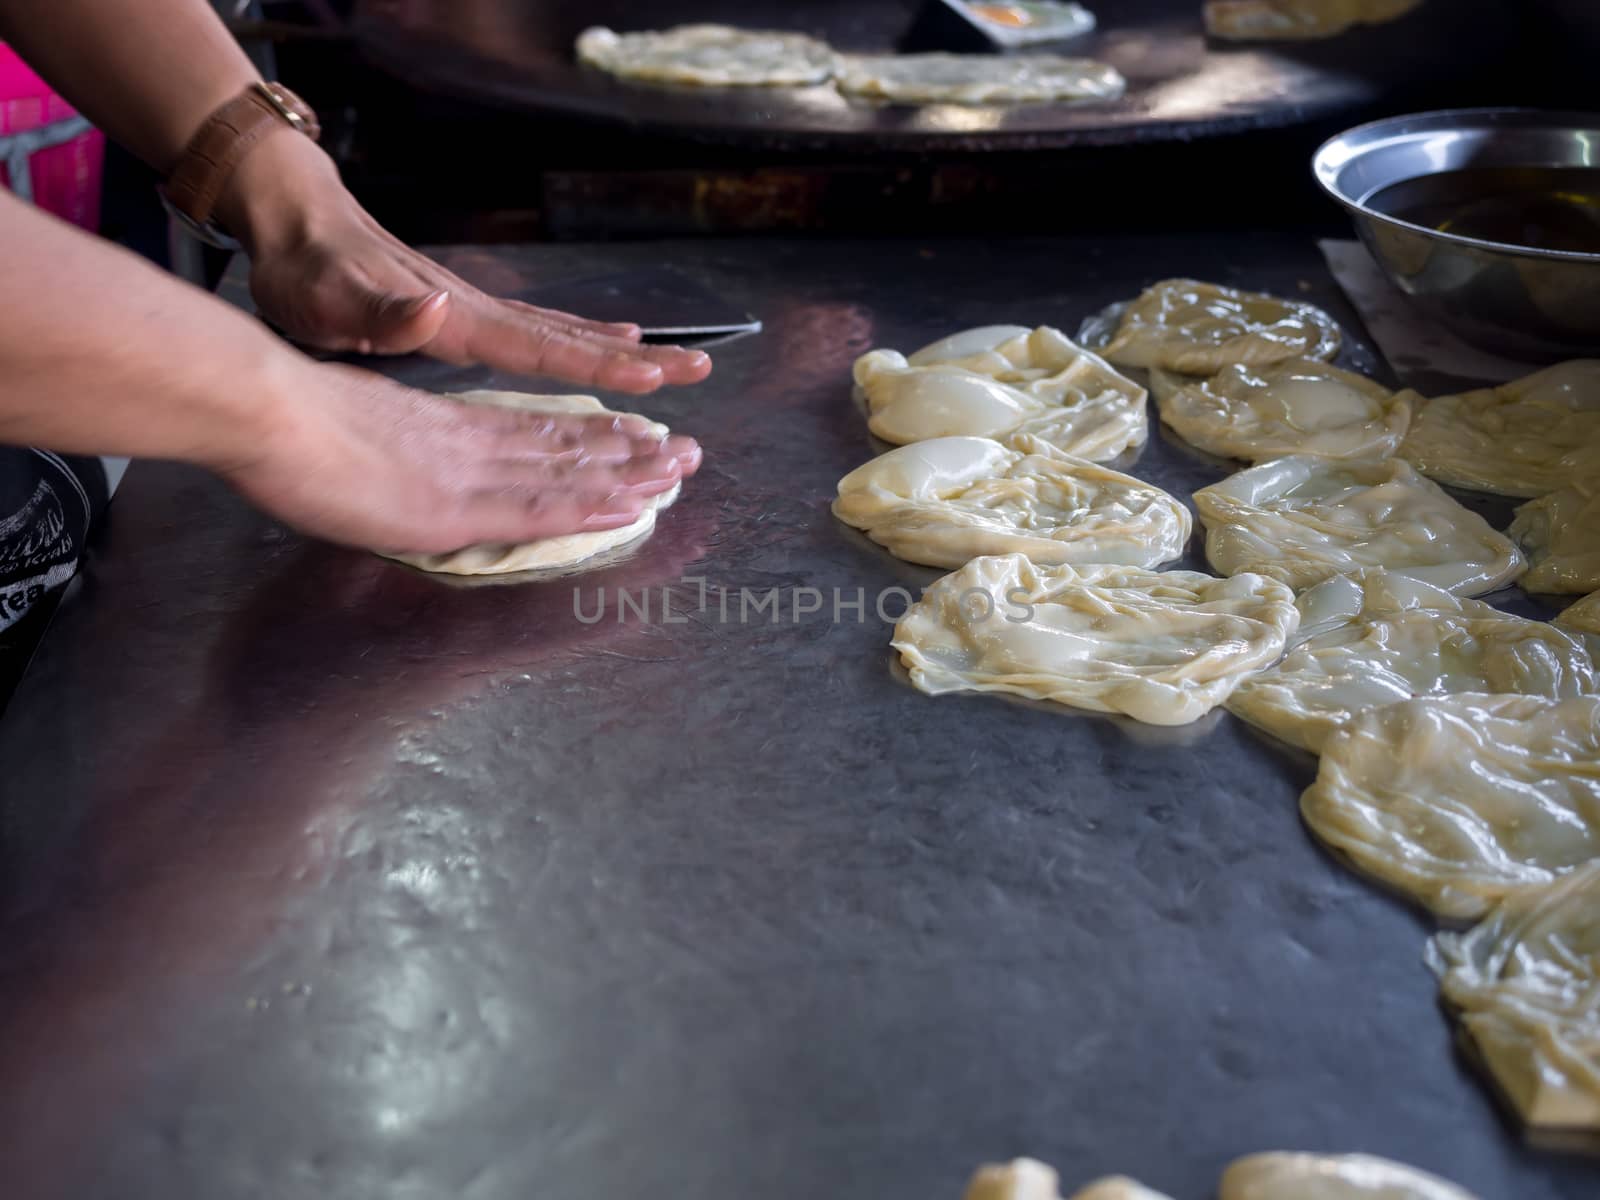 Roti Making, roti thresh flour by roti maker with oil. Indian traditional street food. Hand making roti.